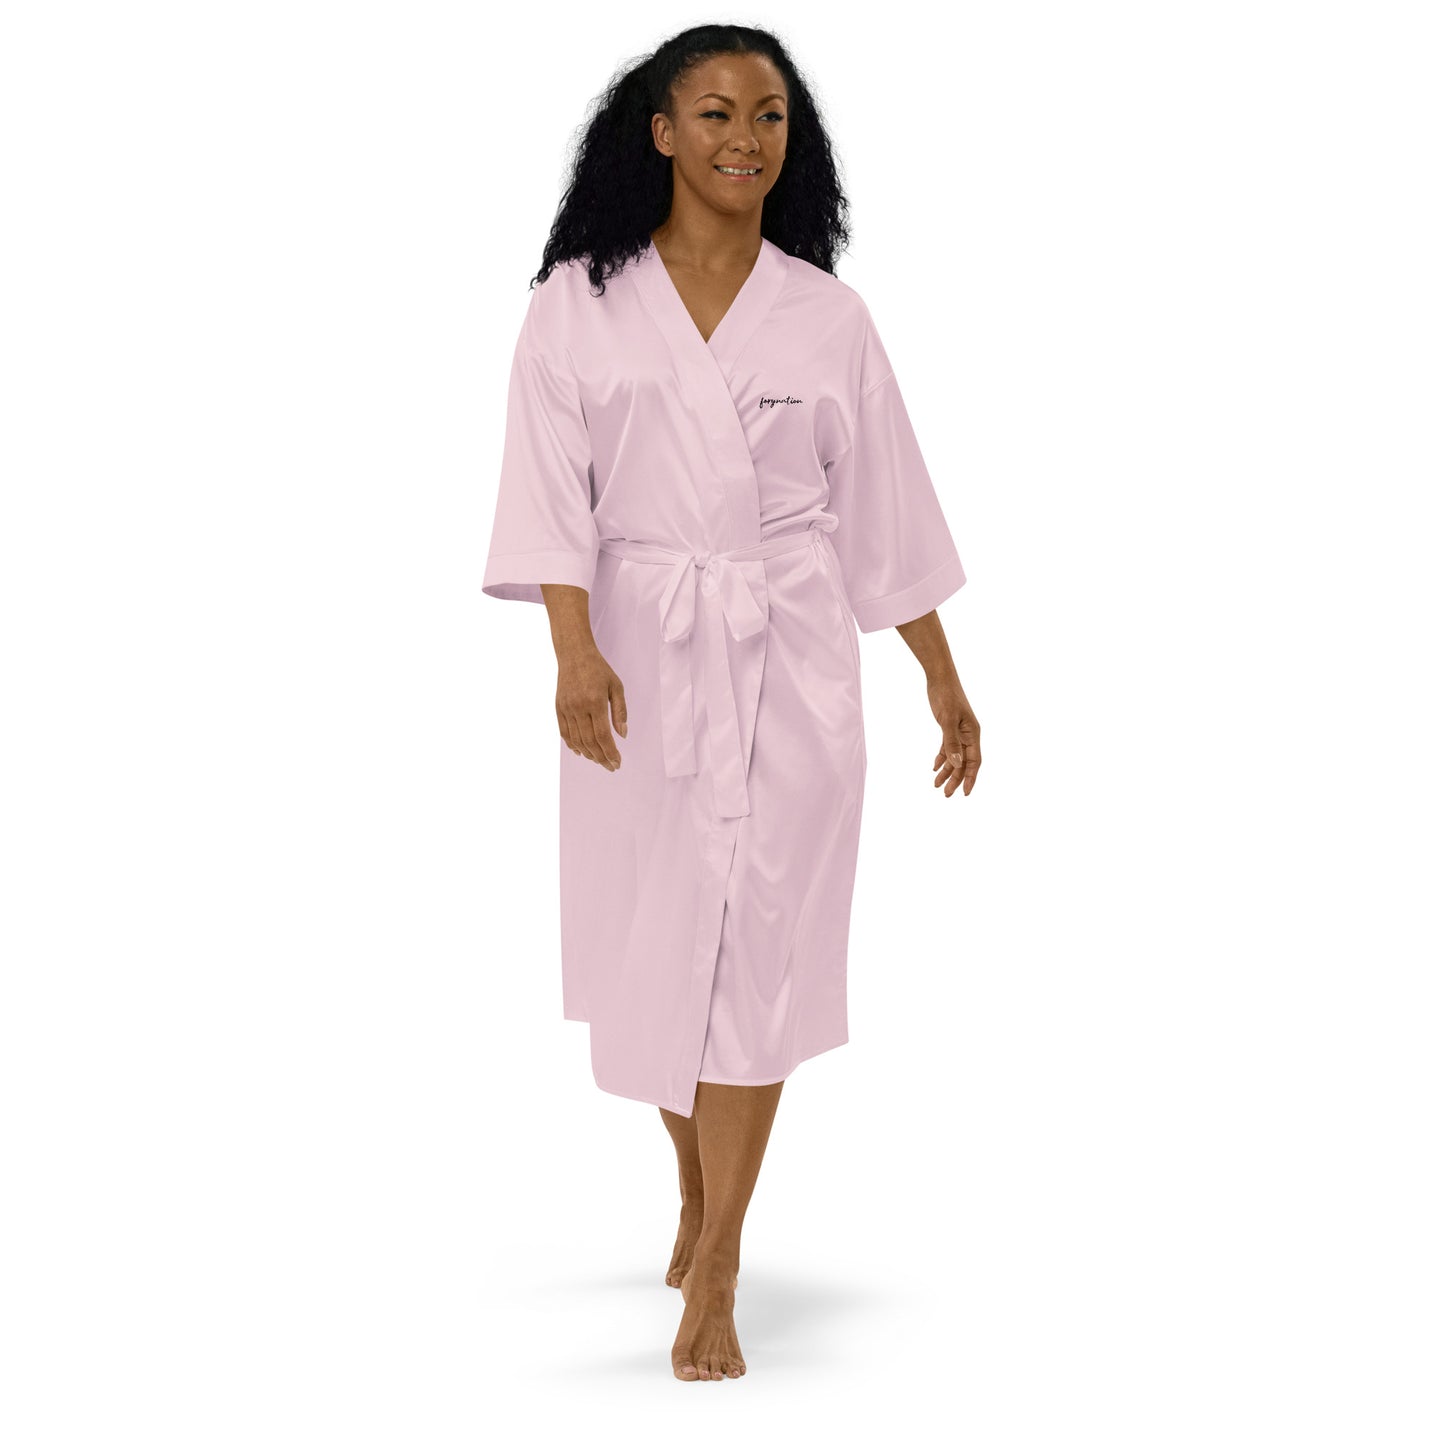 FN SLEEPWEAR WOMEN'S: Signature Satin Robe (light pink) embroidered